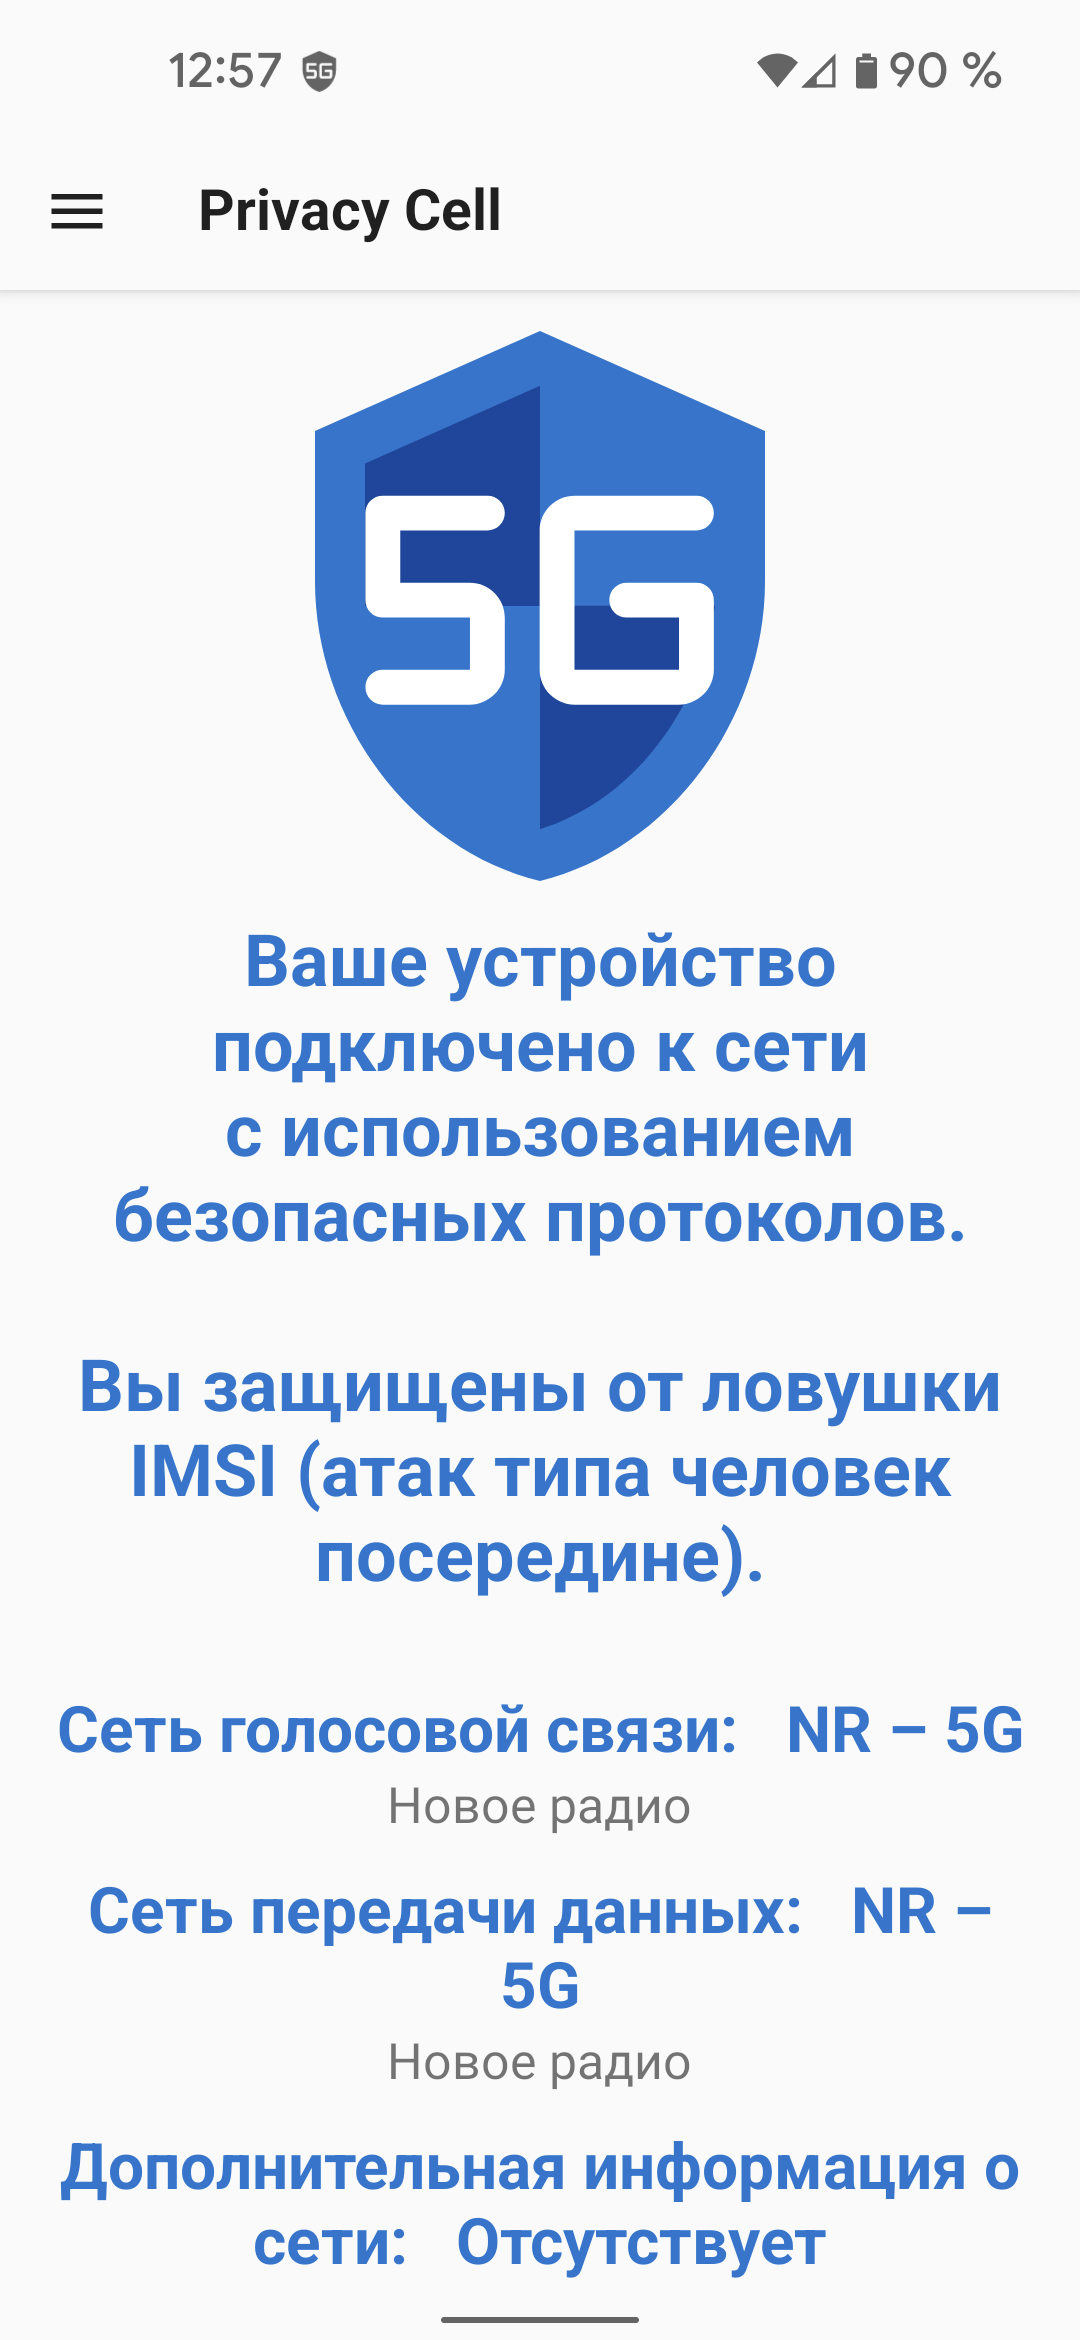 fastlane/metadata/android/ru-RU/images/phoneScreenshots/01-SecureNetwork-ru.png